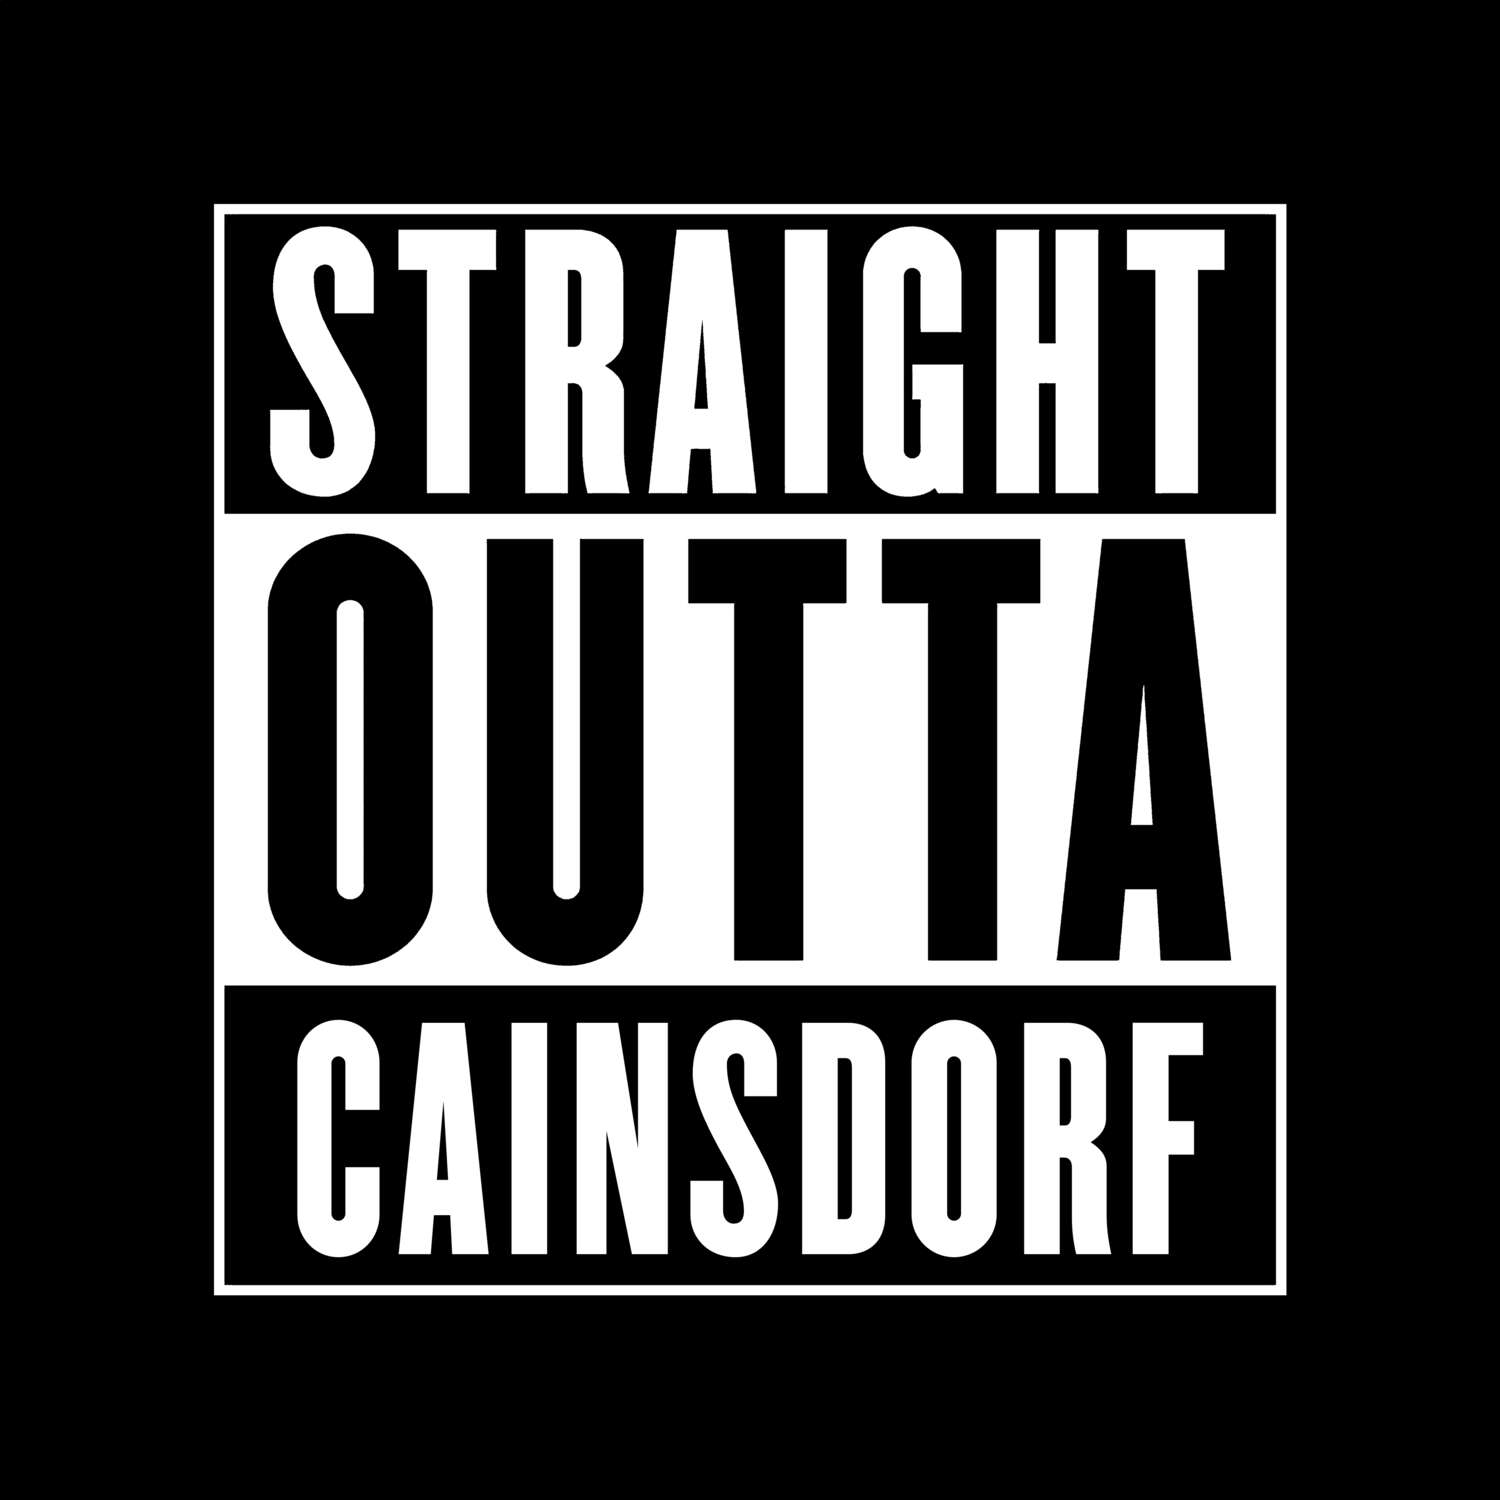 Cainsdorf T-Shirt »Straight Outta«